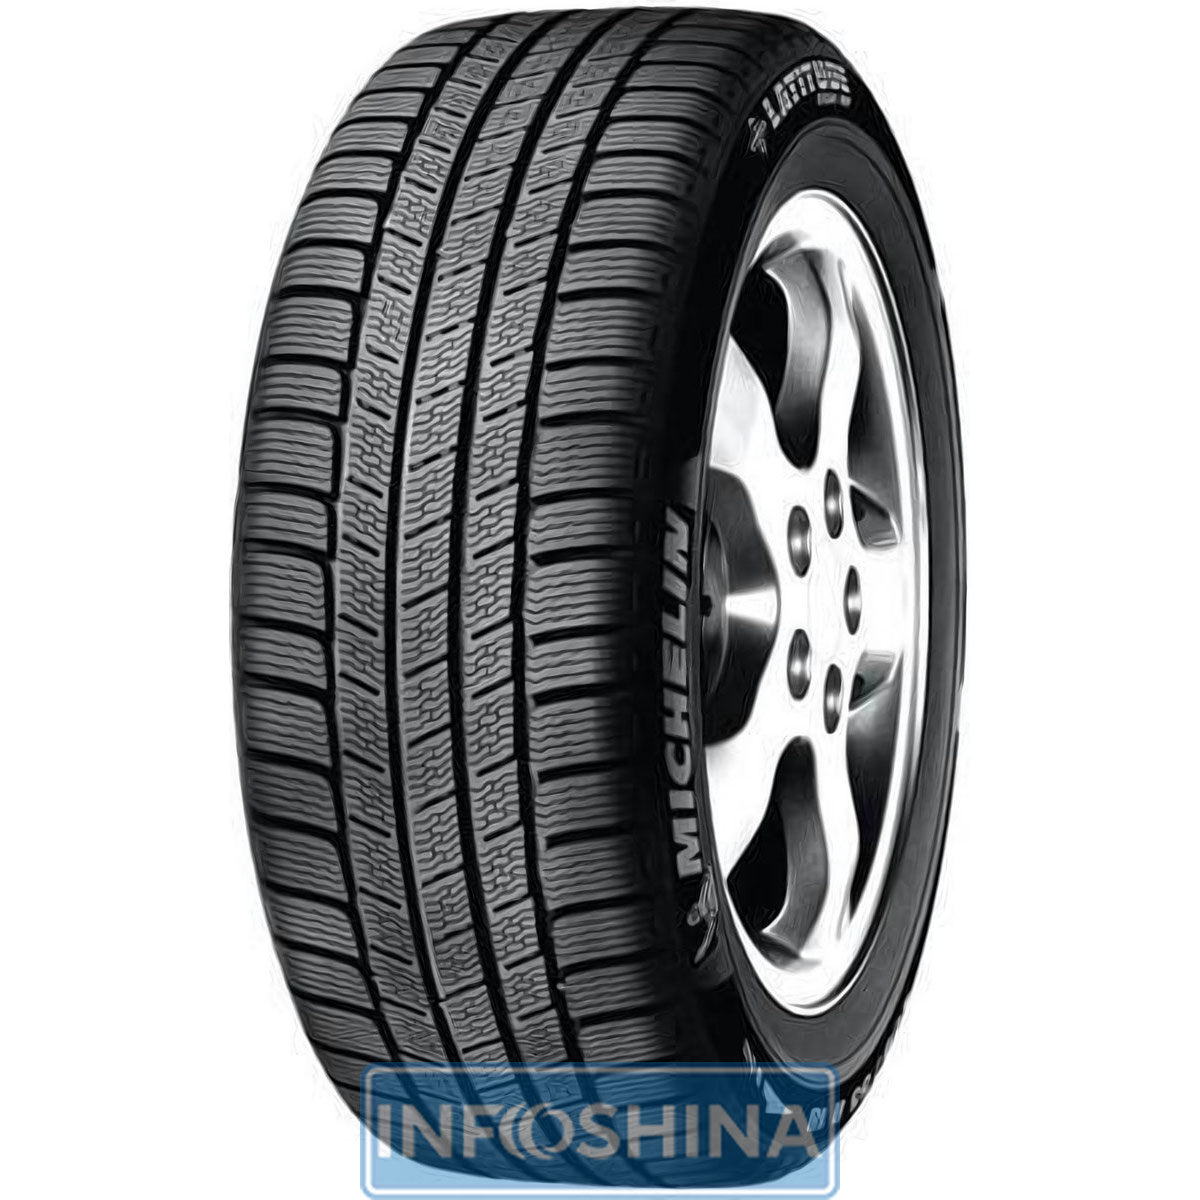 Купить шины Michelin Latitude Alpin HP 235/60 R18 97H